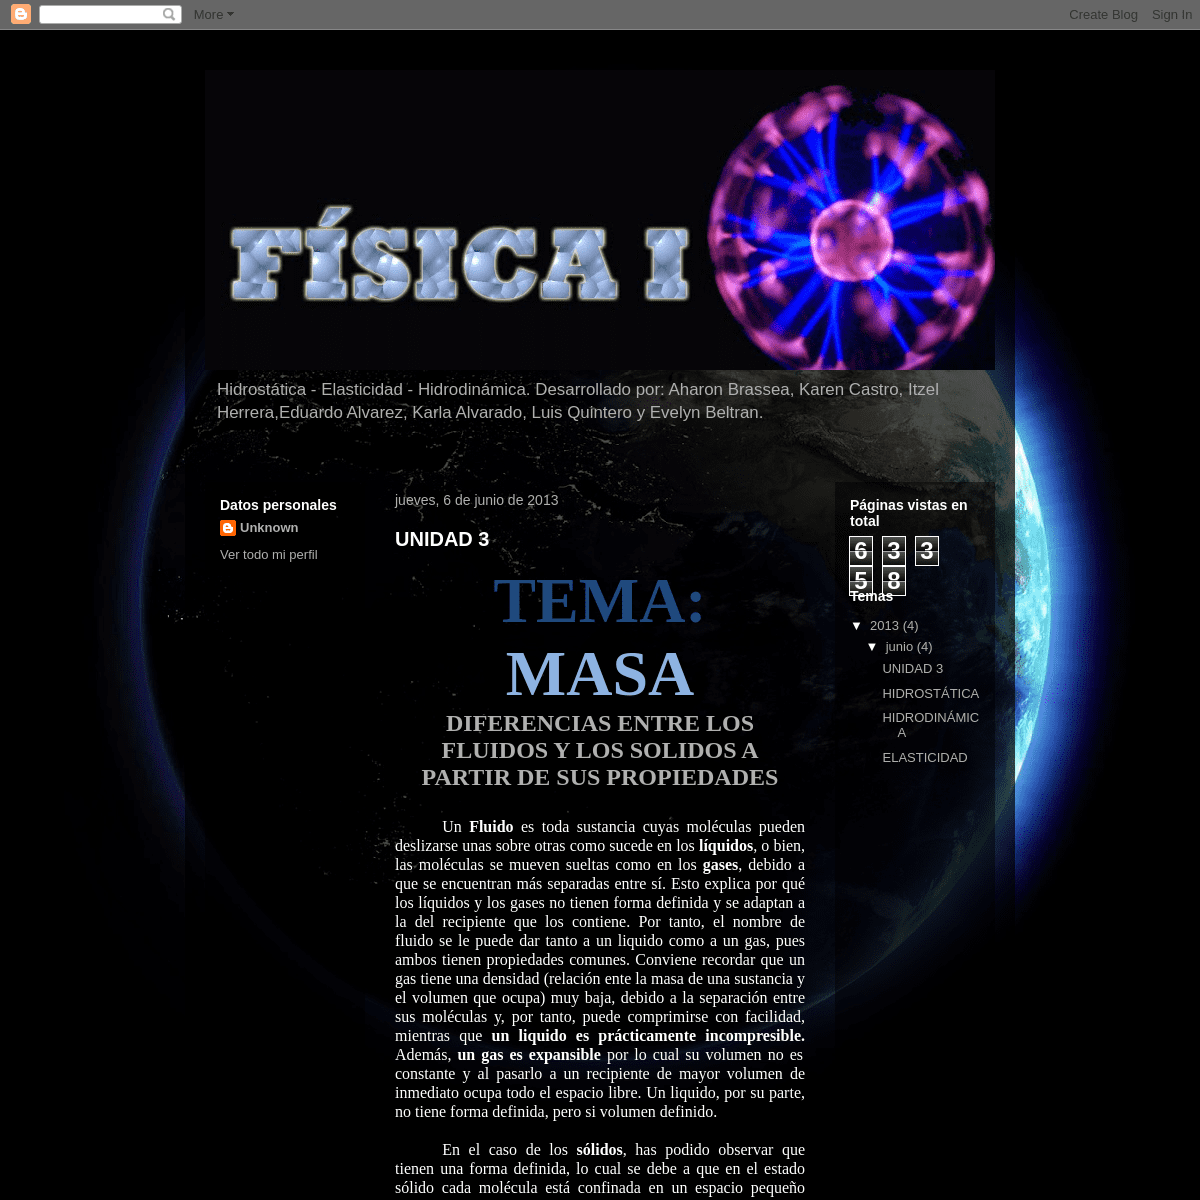 A complete backup of fisicacbtis21.blogspot.com